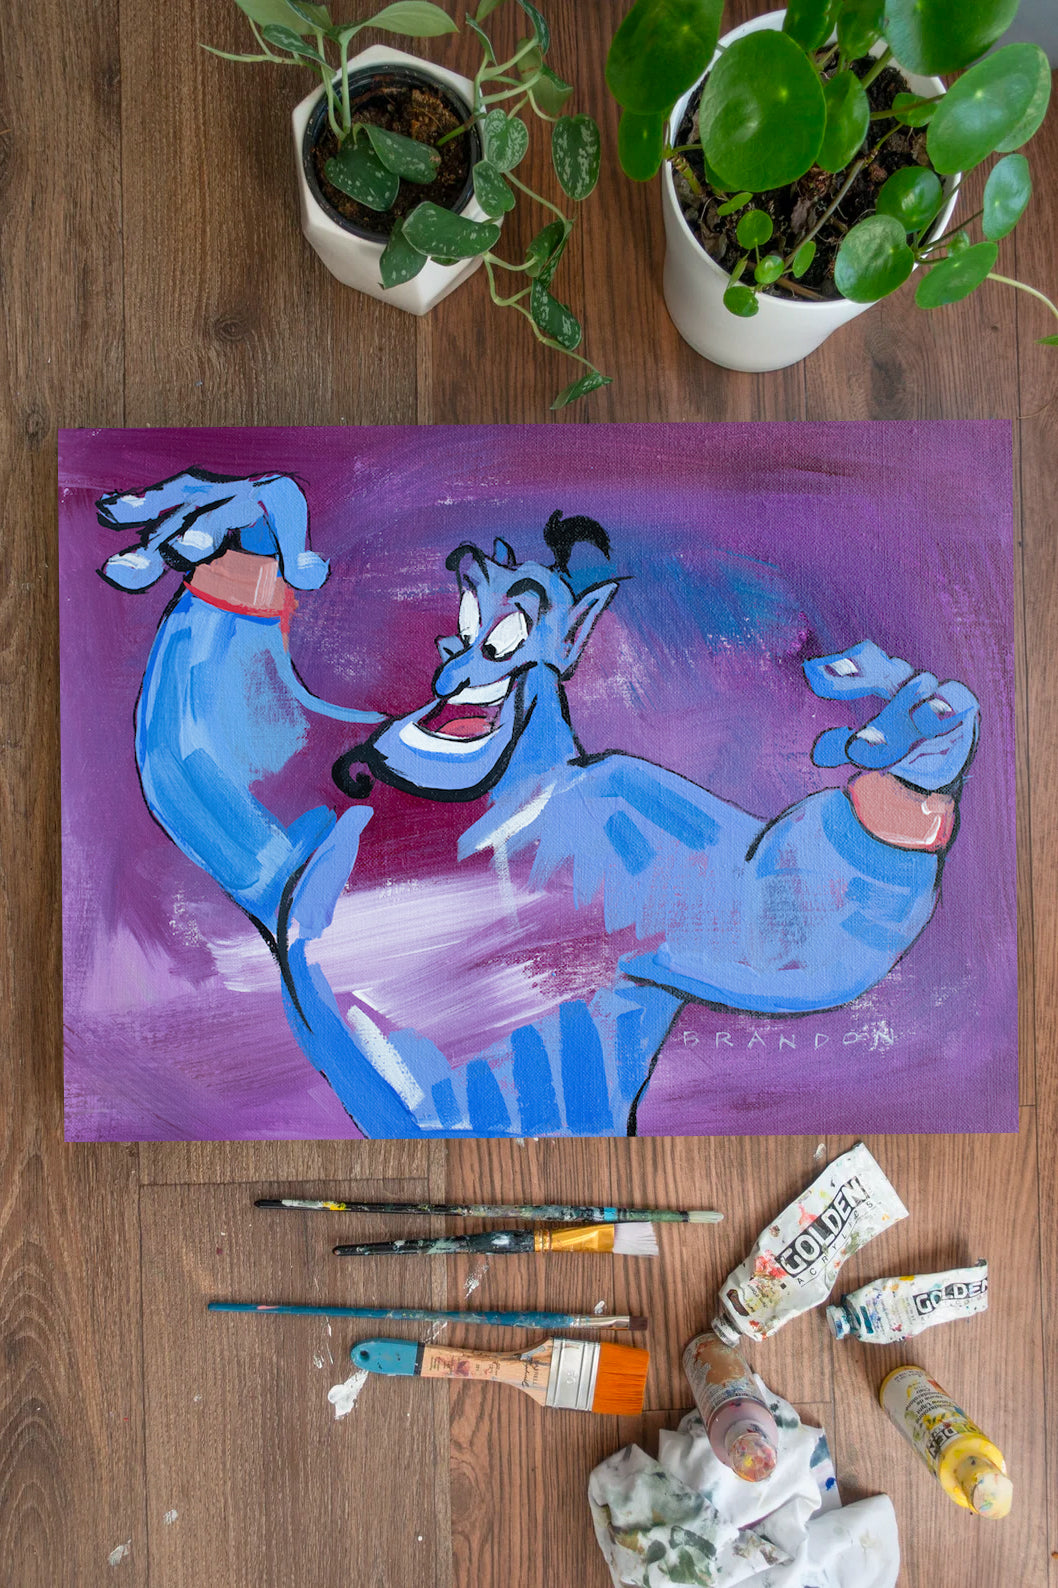 Disney's Aladdin "Genie" Framed Painting | Original Acrylic Painting on 12x16 Premium Canvas Panel